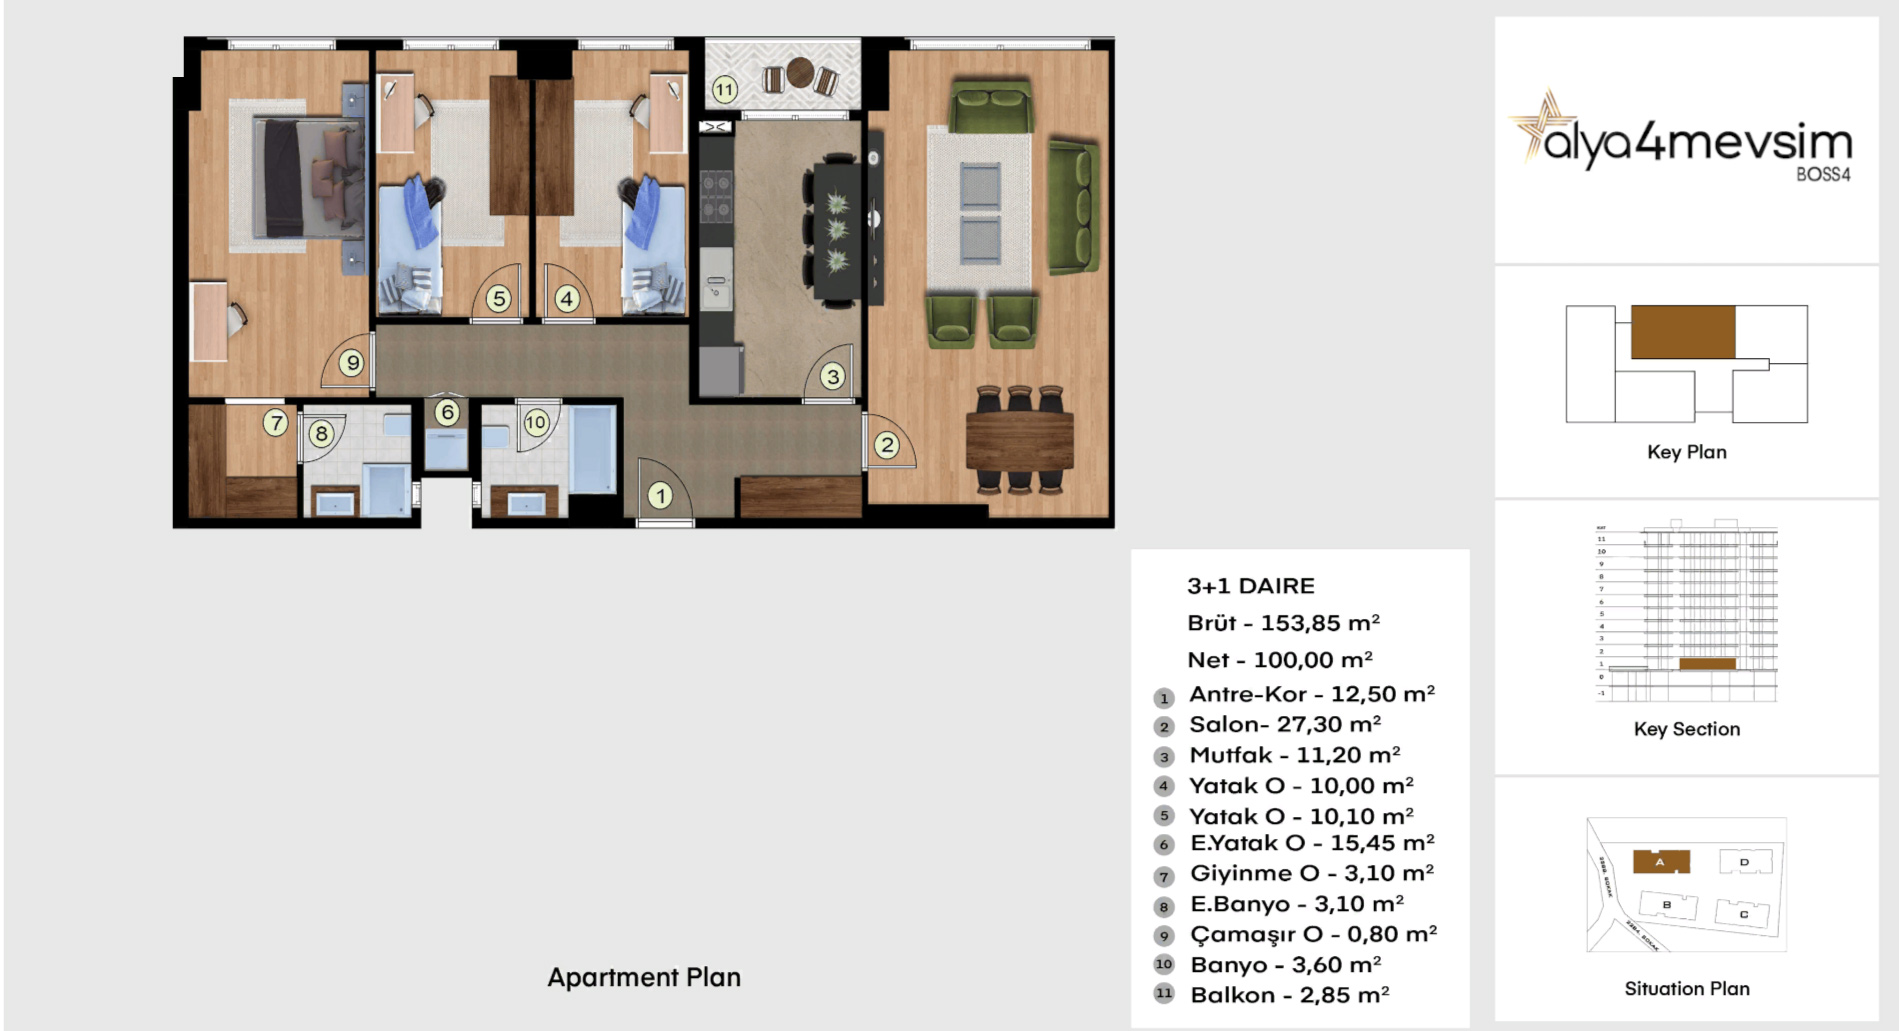 3 Bedroom apartment in Alya 4 Mevsim project